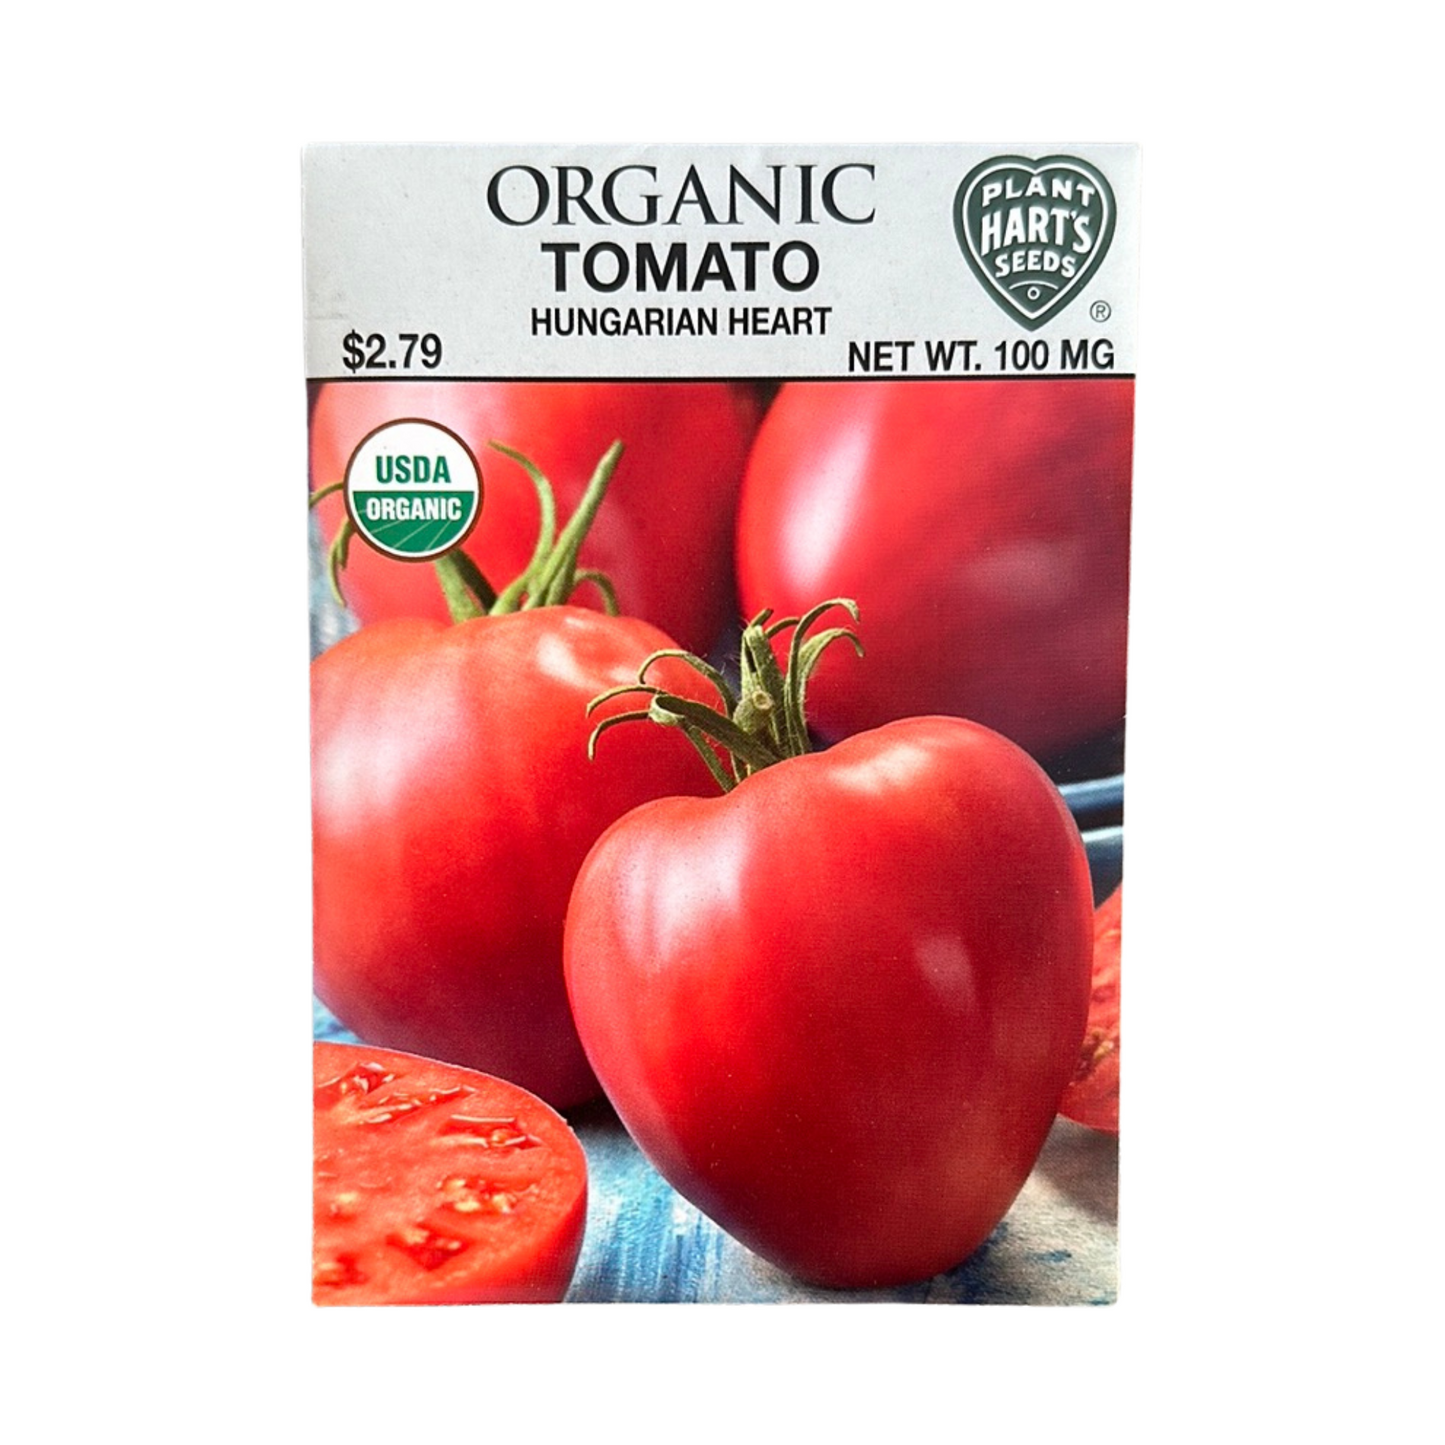 Organic Tomato Hungarian Heart